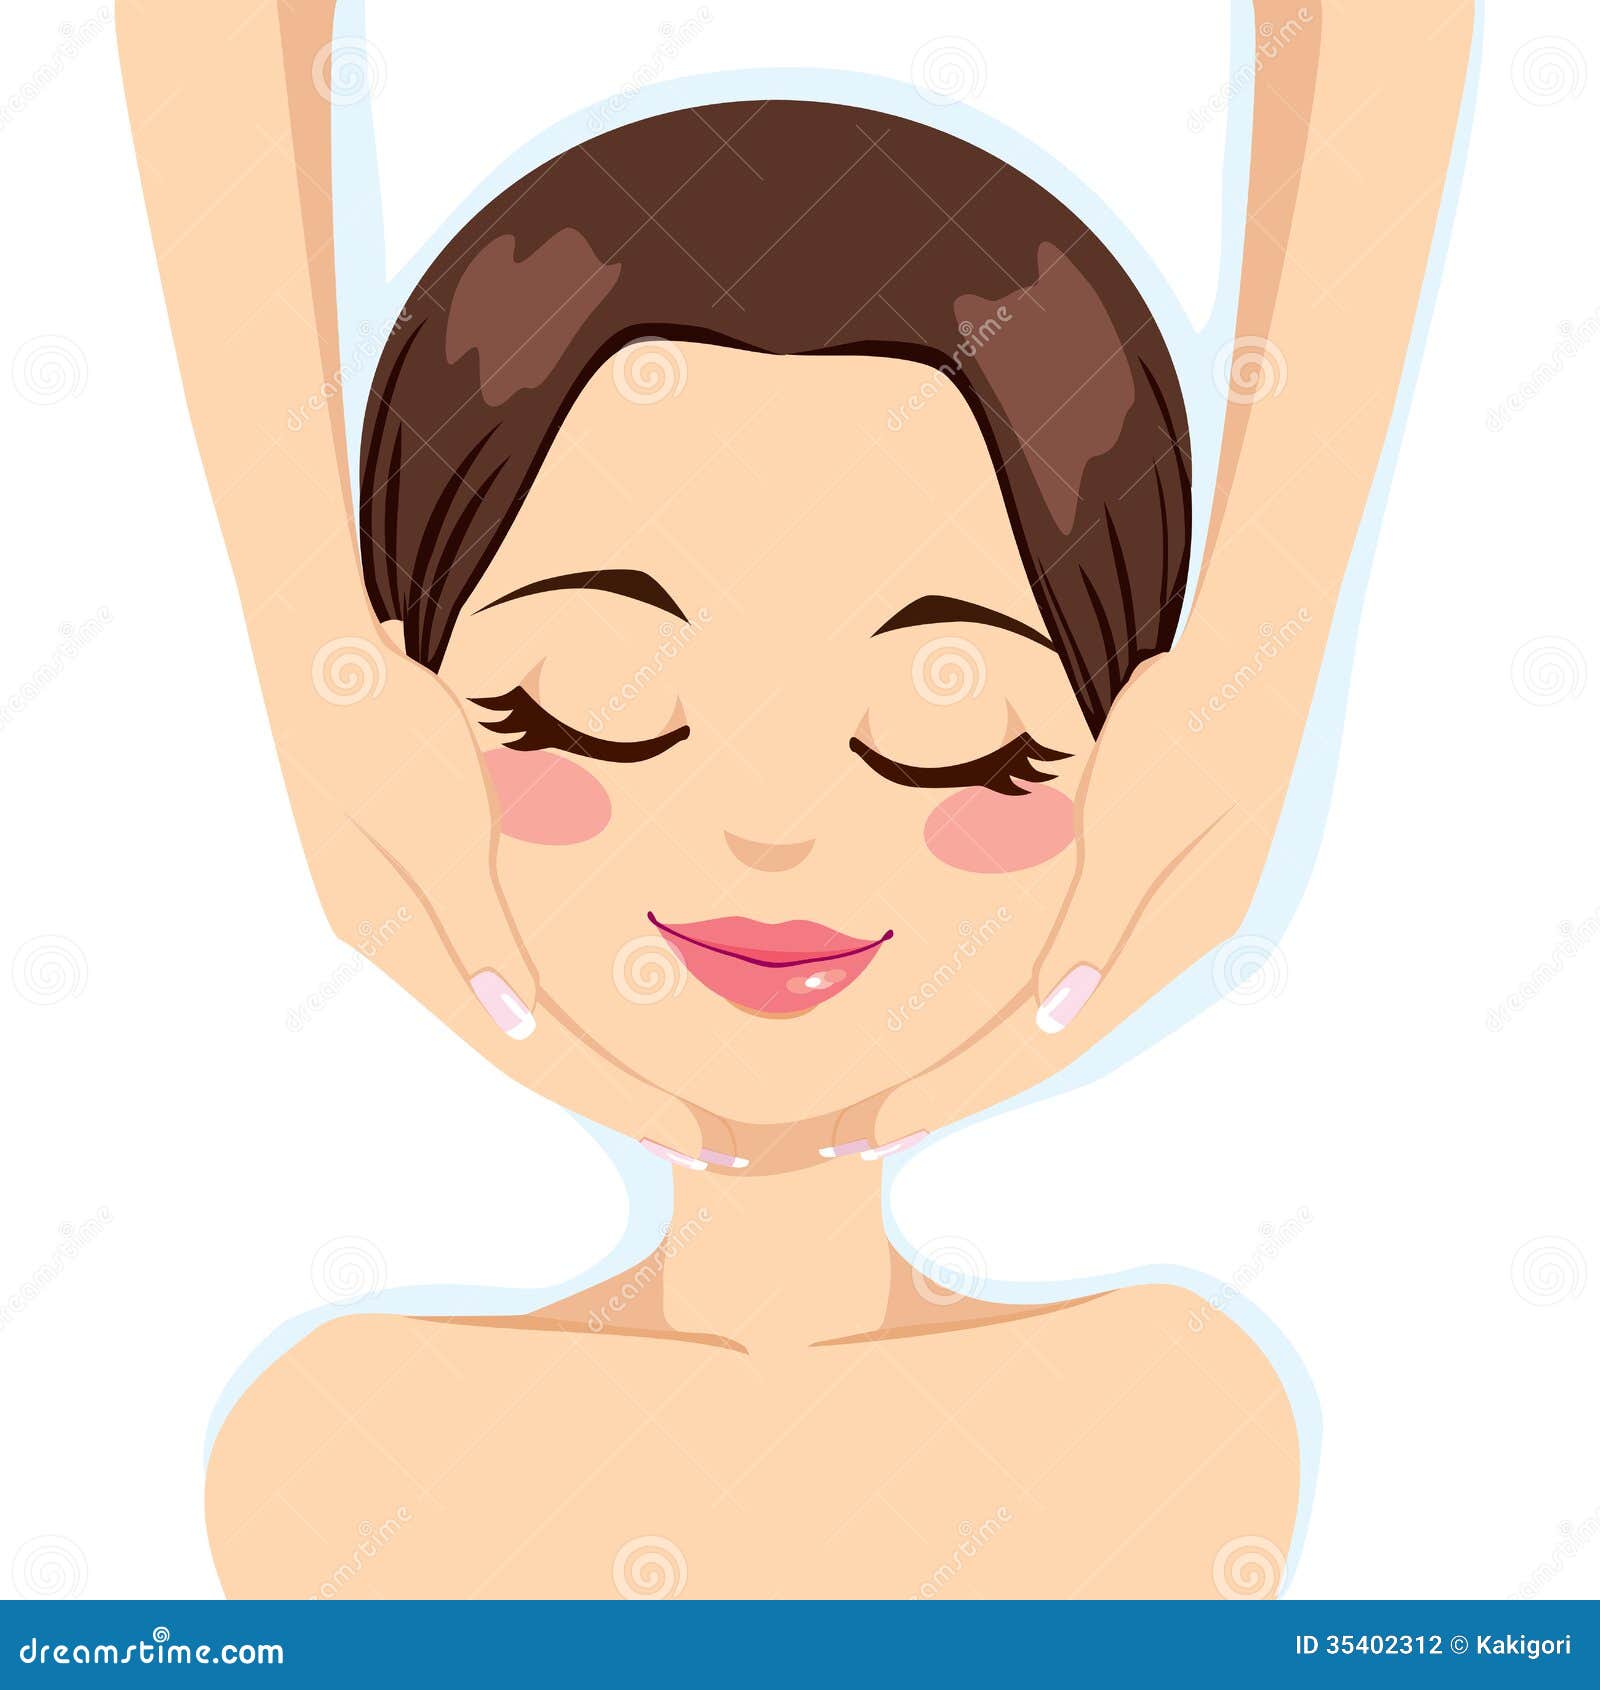 skincare-facial-massage-beautiful-young-woman-enjoying-treatment-35402312.jpg